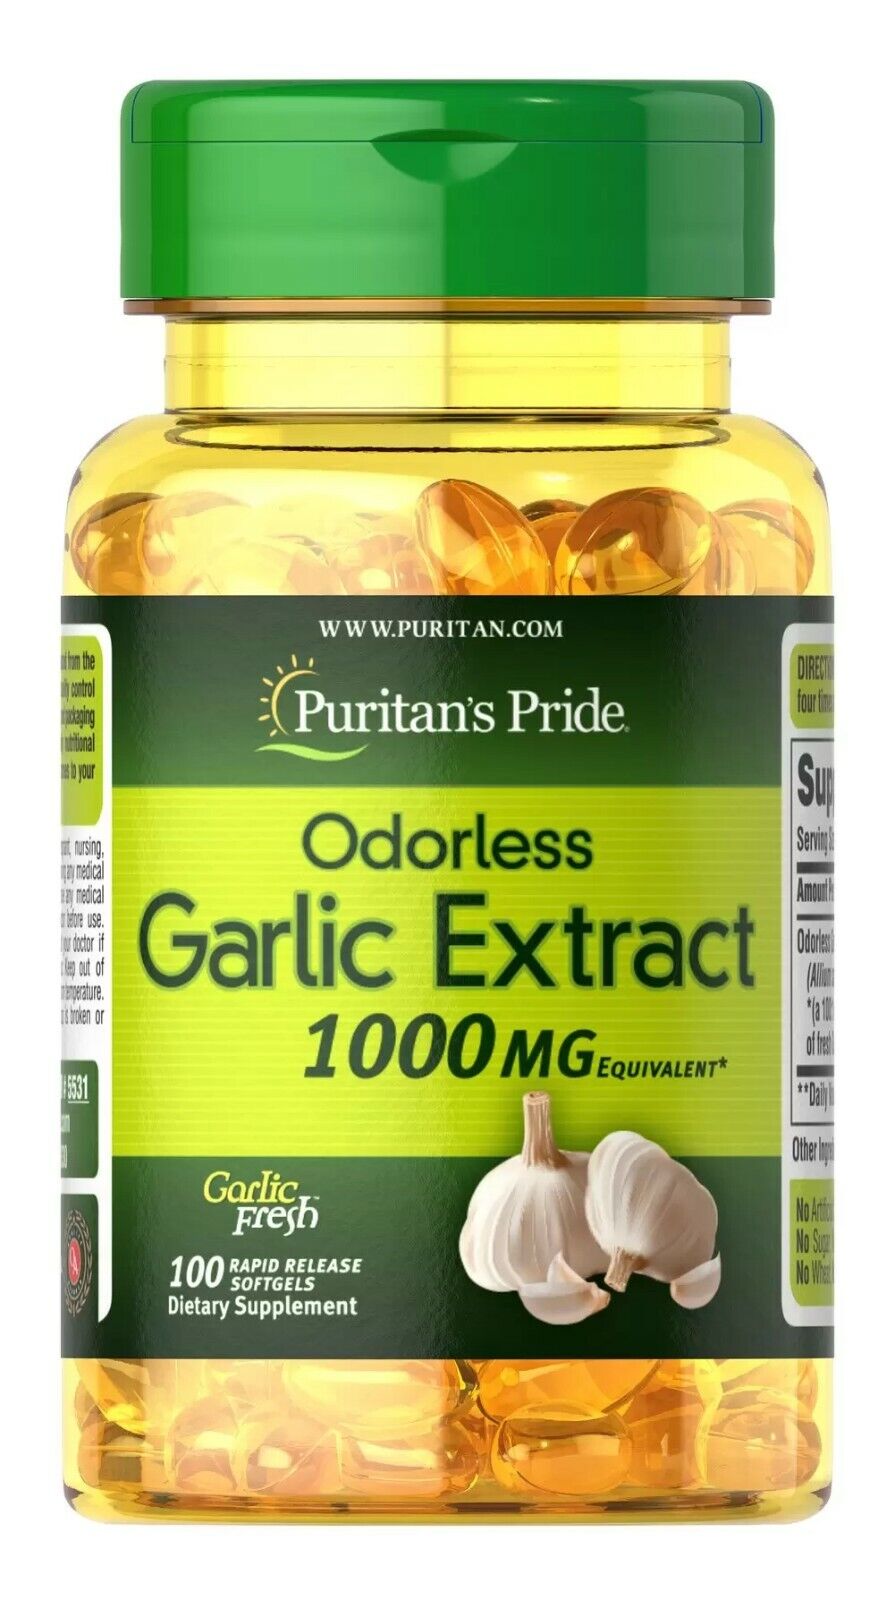 Puritan's Pride Odorless Garlic Extract 1000 mg 100 Rapid Release Softgels